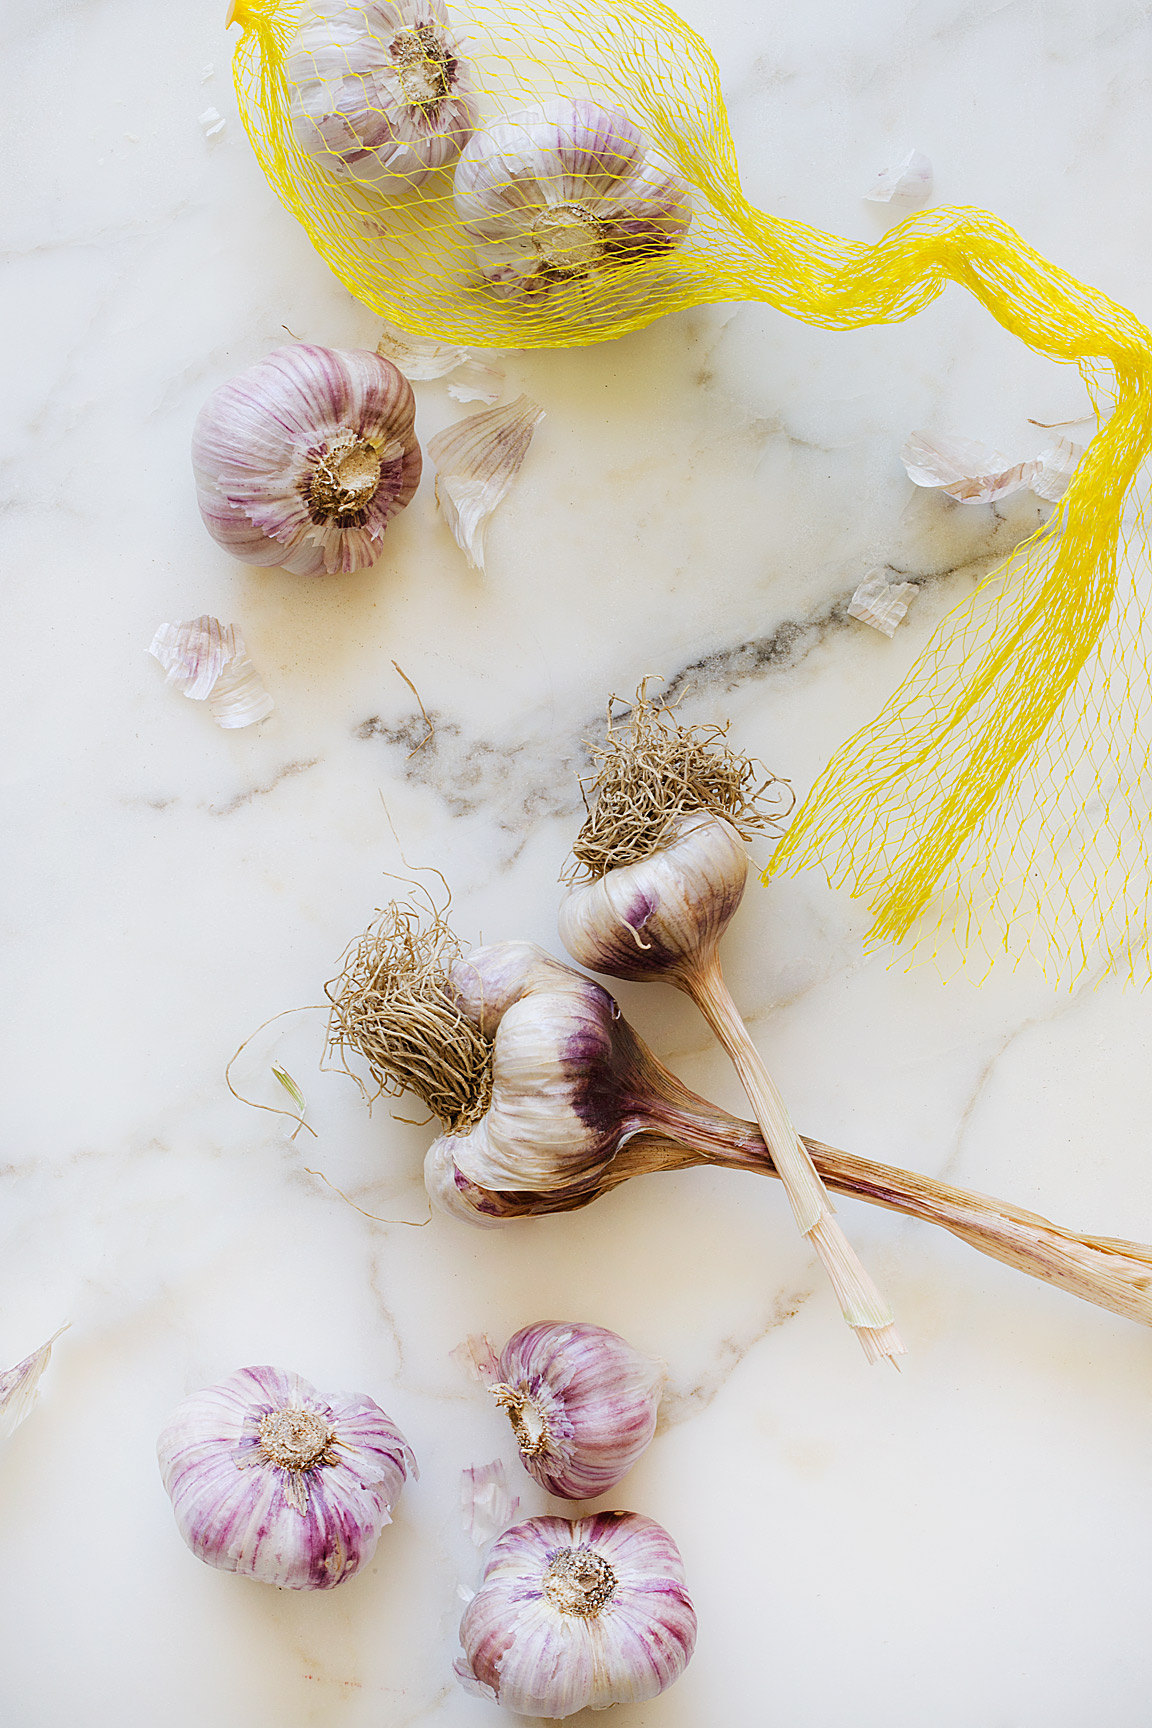 garlic, Rose Hodges Food Photography